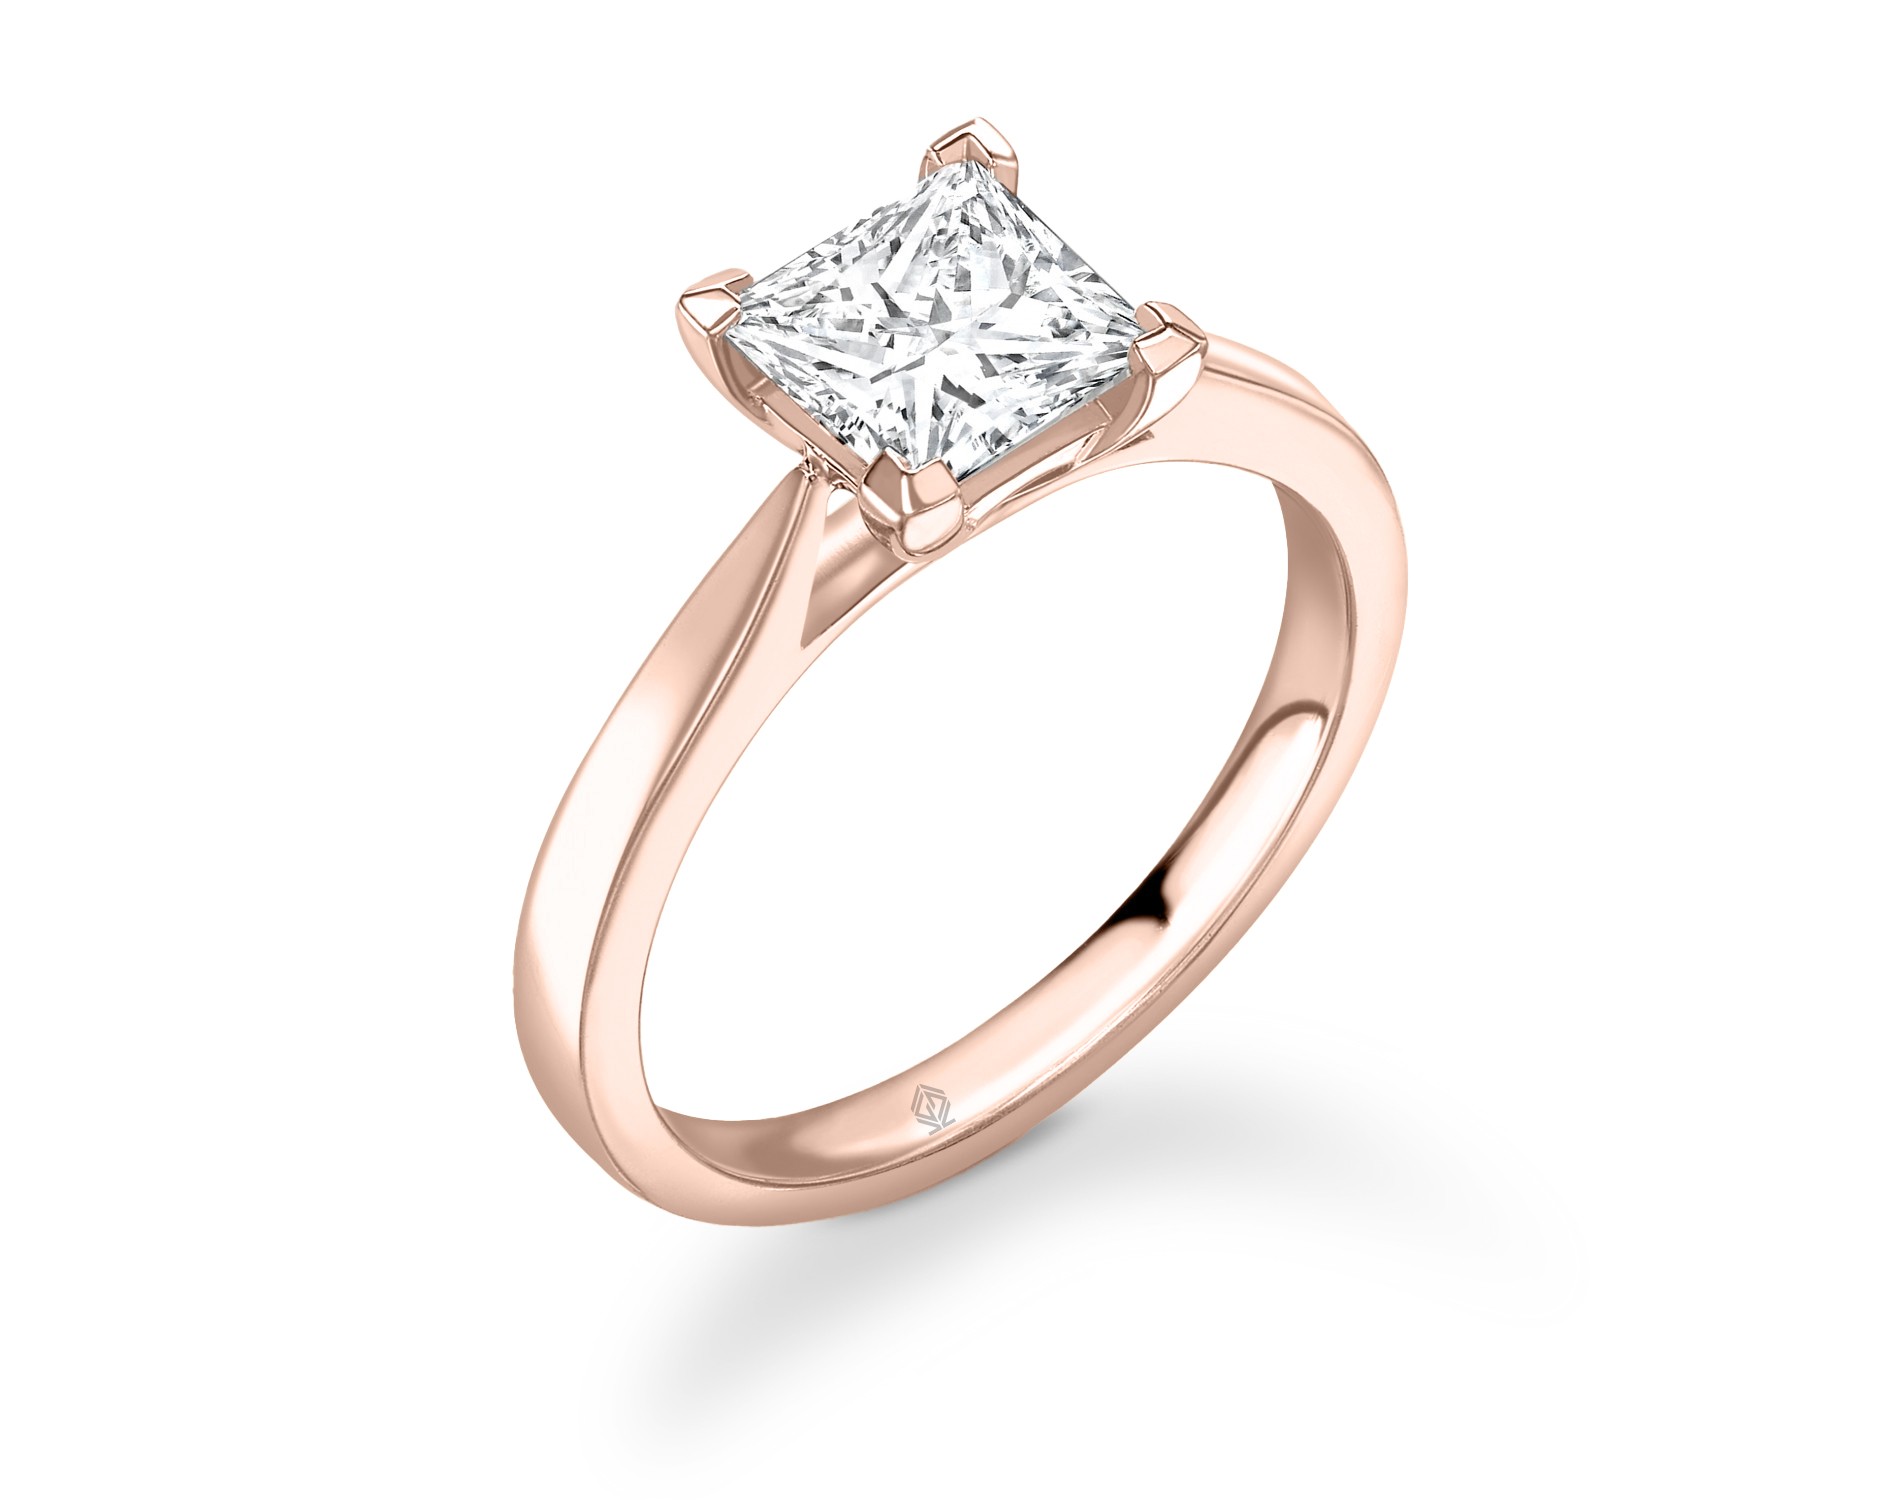 18K ROSE GOLD 4 PRONGS PRINCESS CUT DIAMOND ENGAGEMENT RING